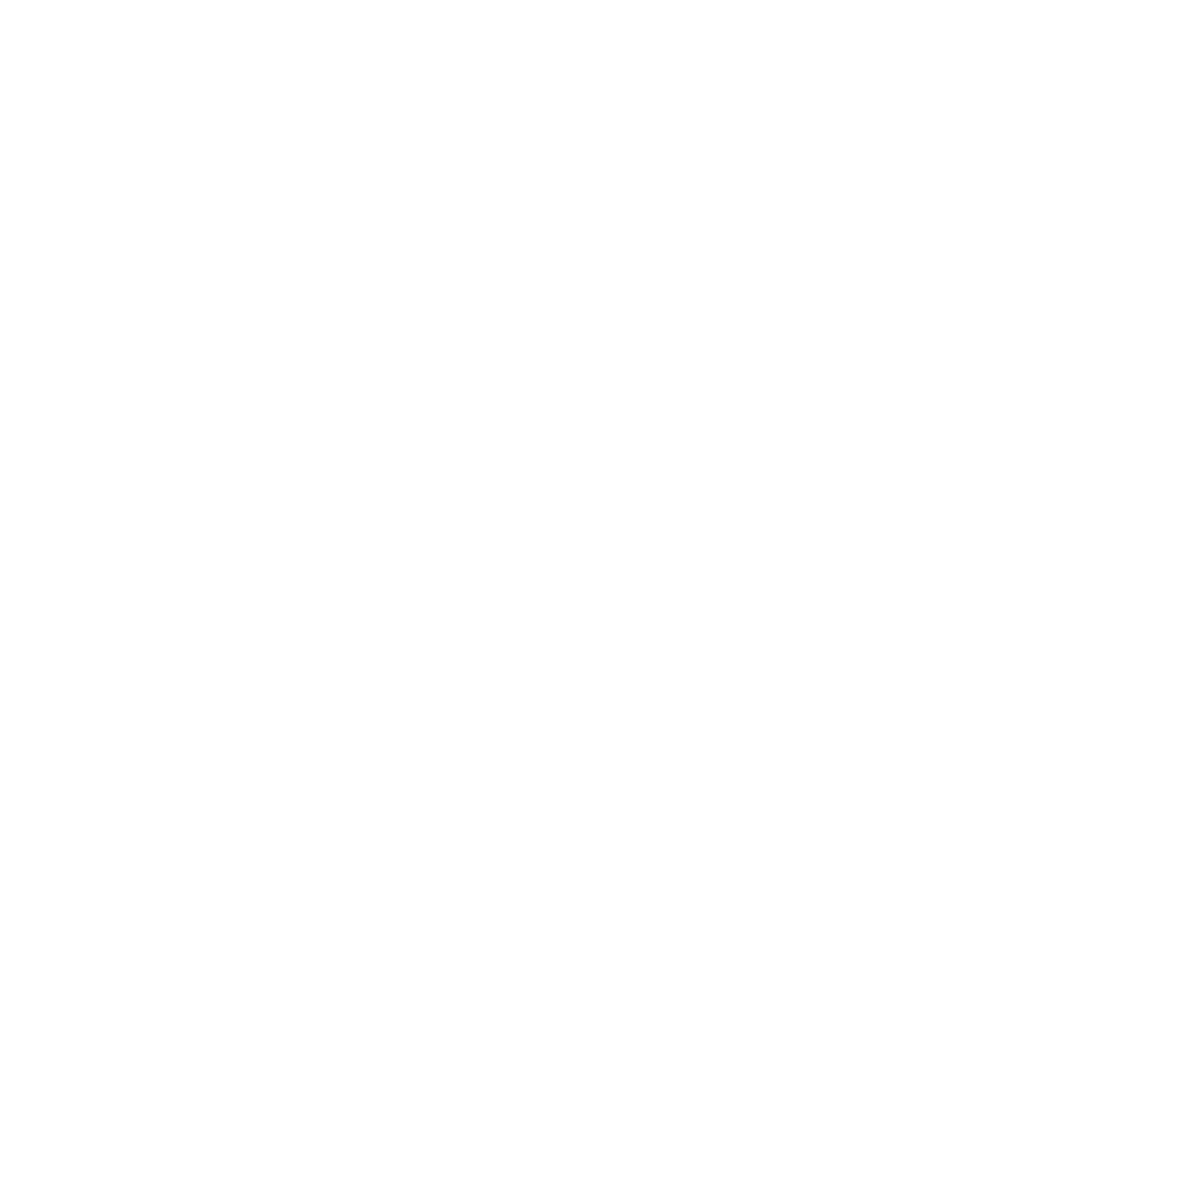 OSHA compliant badge icon